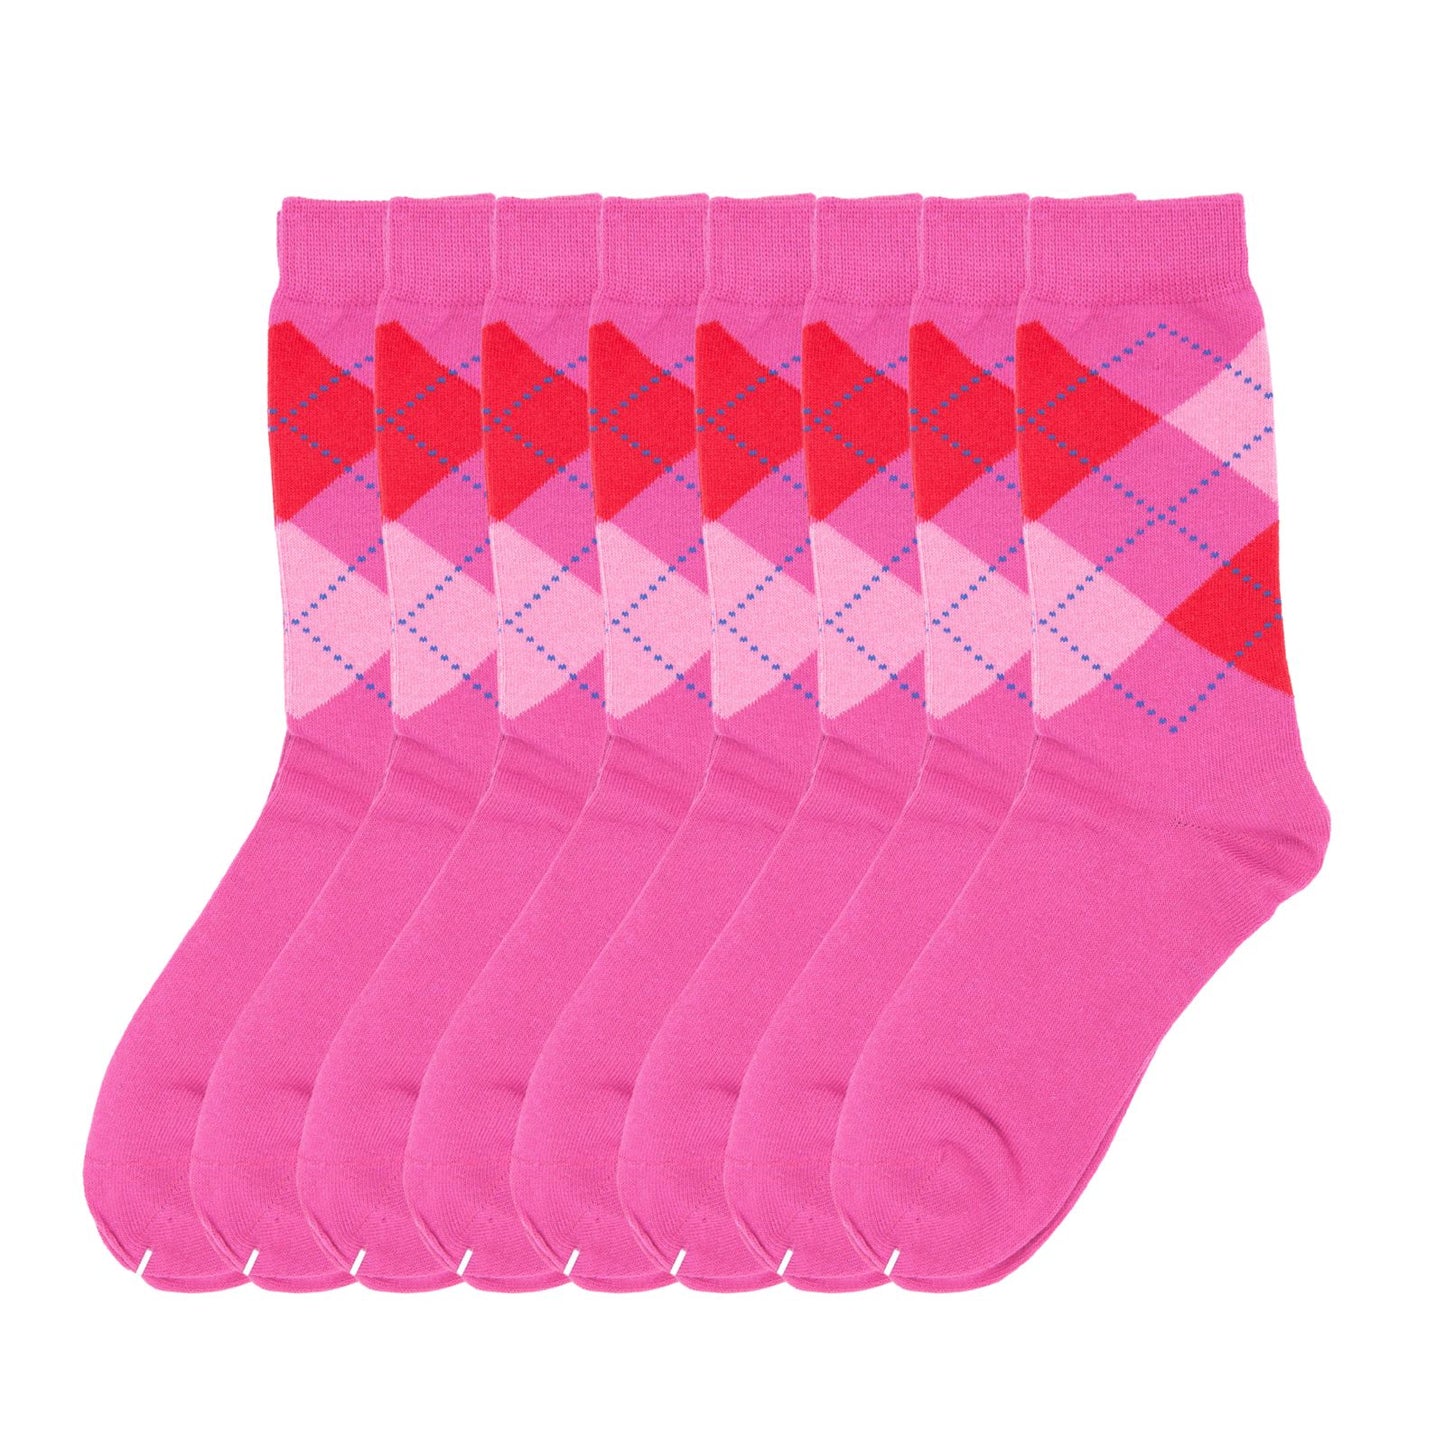 Women Classic 8 Pairs Argyle Check Cotton Crew Socks Diamond Design 2-8 - Pantsnsox